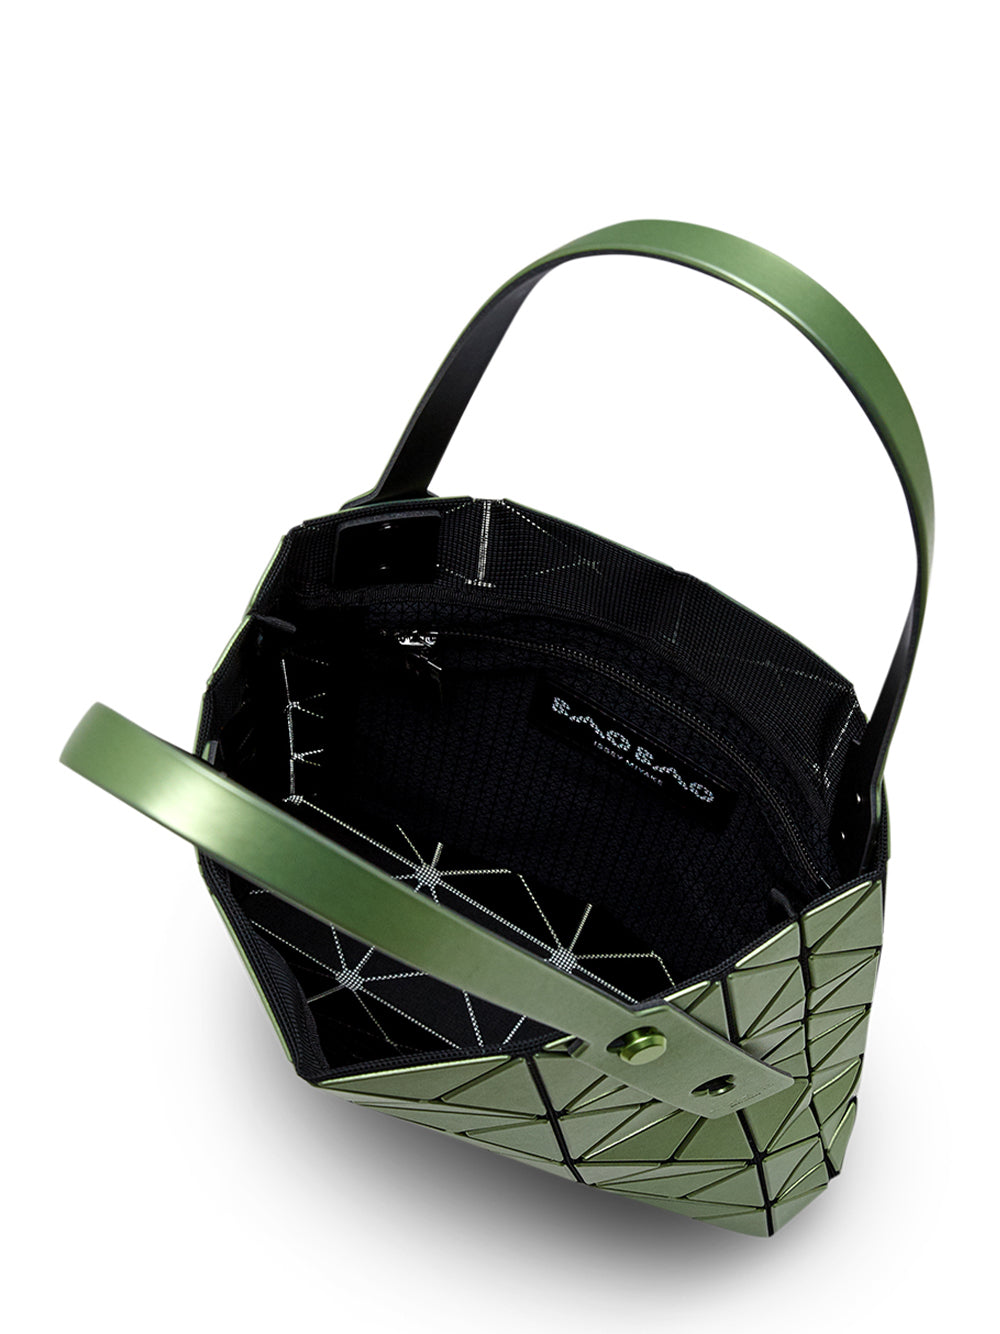 LUCENT BOXY Handbag (Light Green)